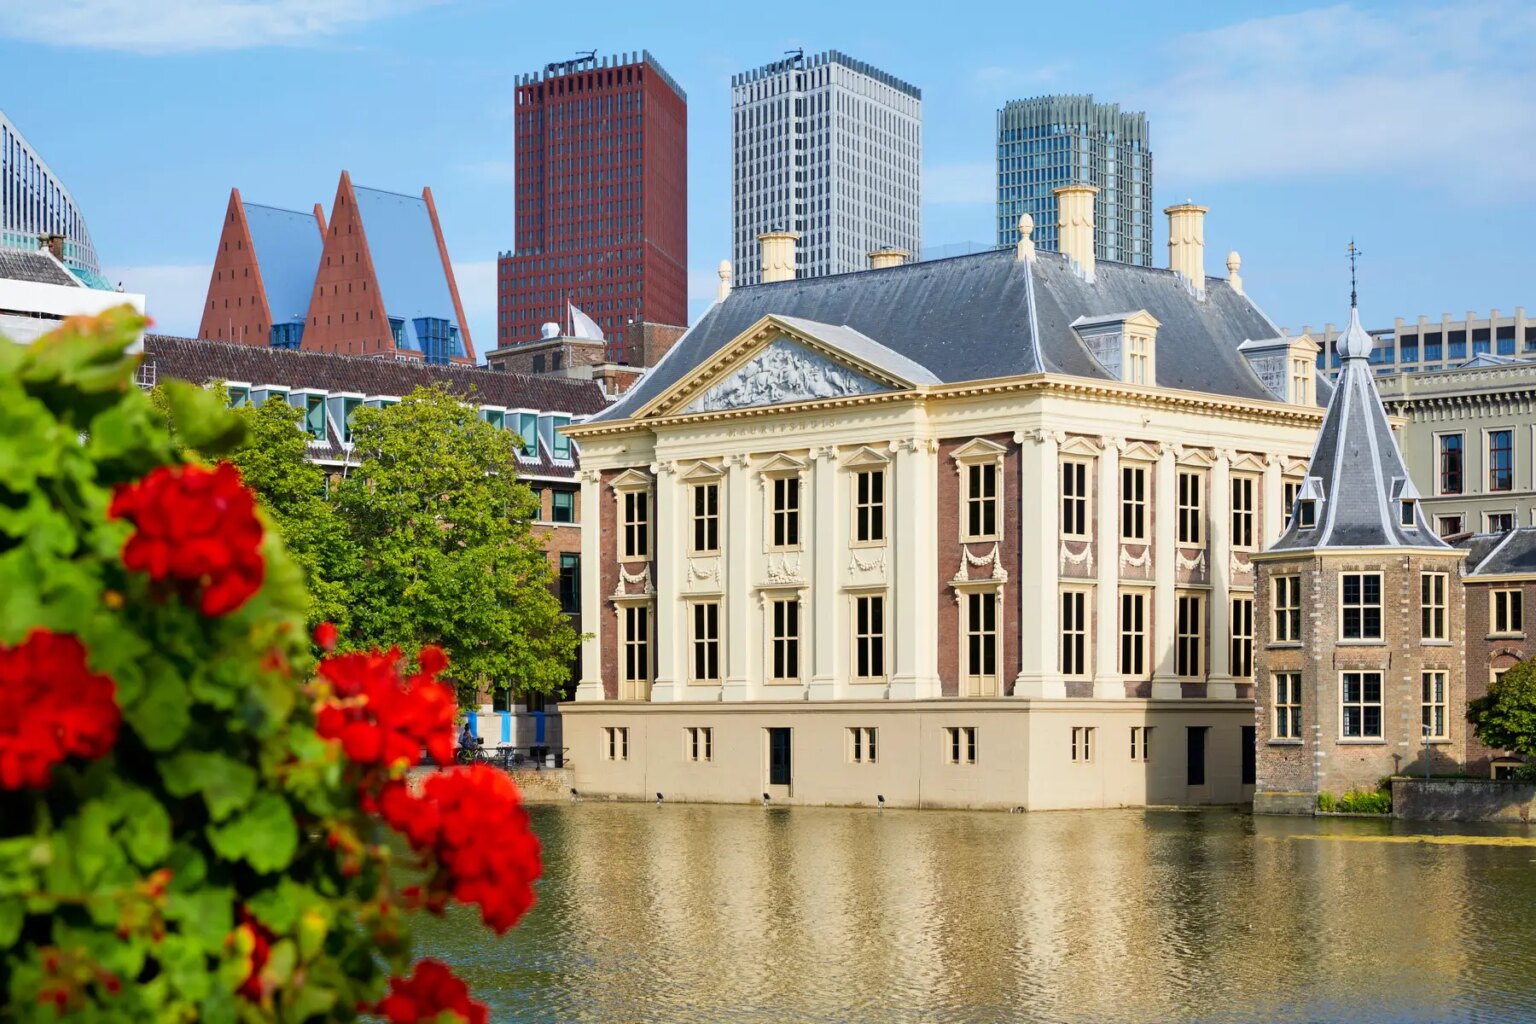 Netherlands museums